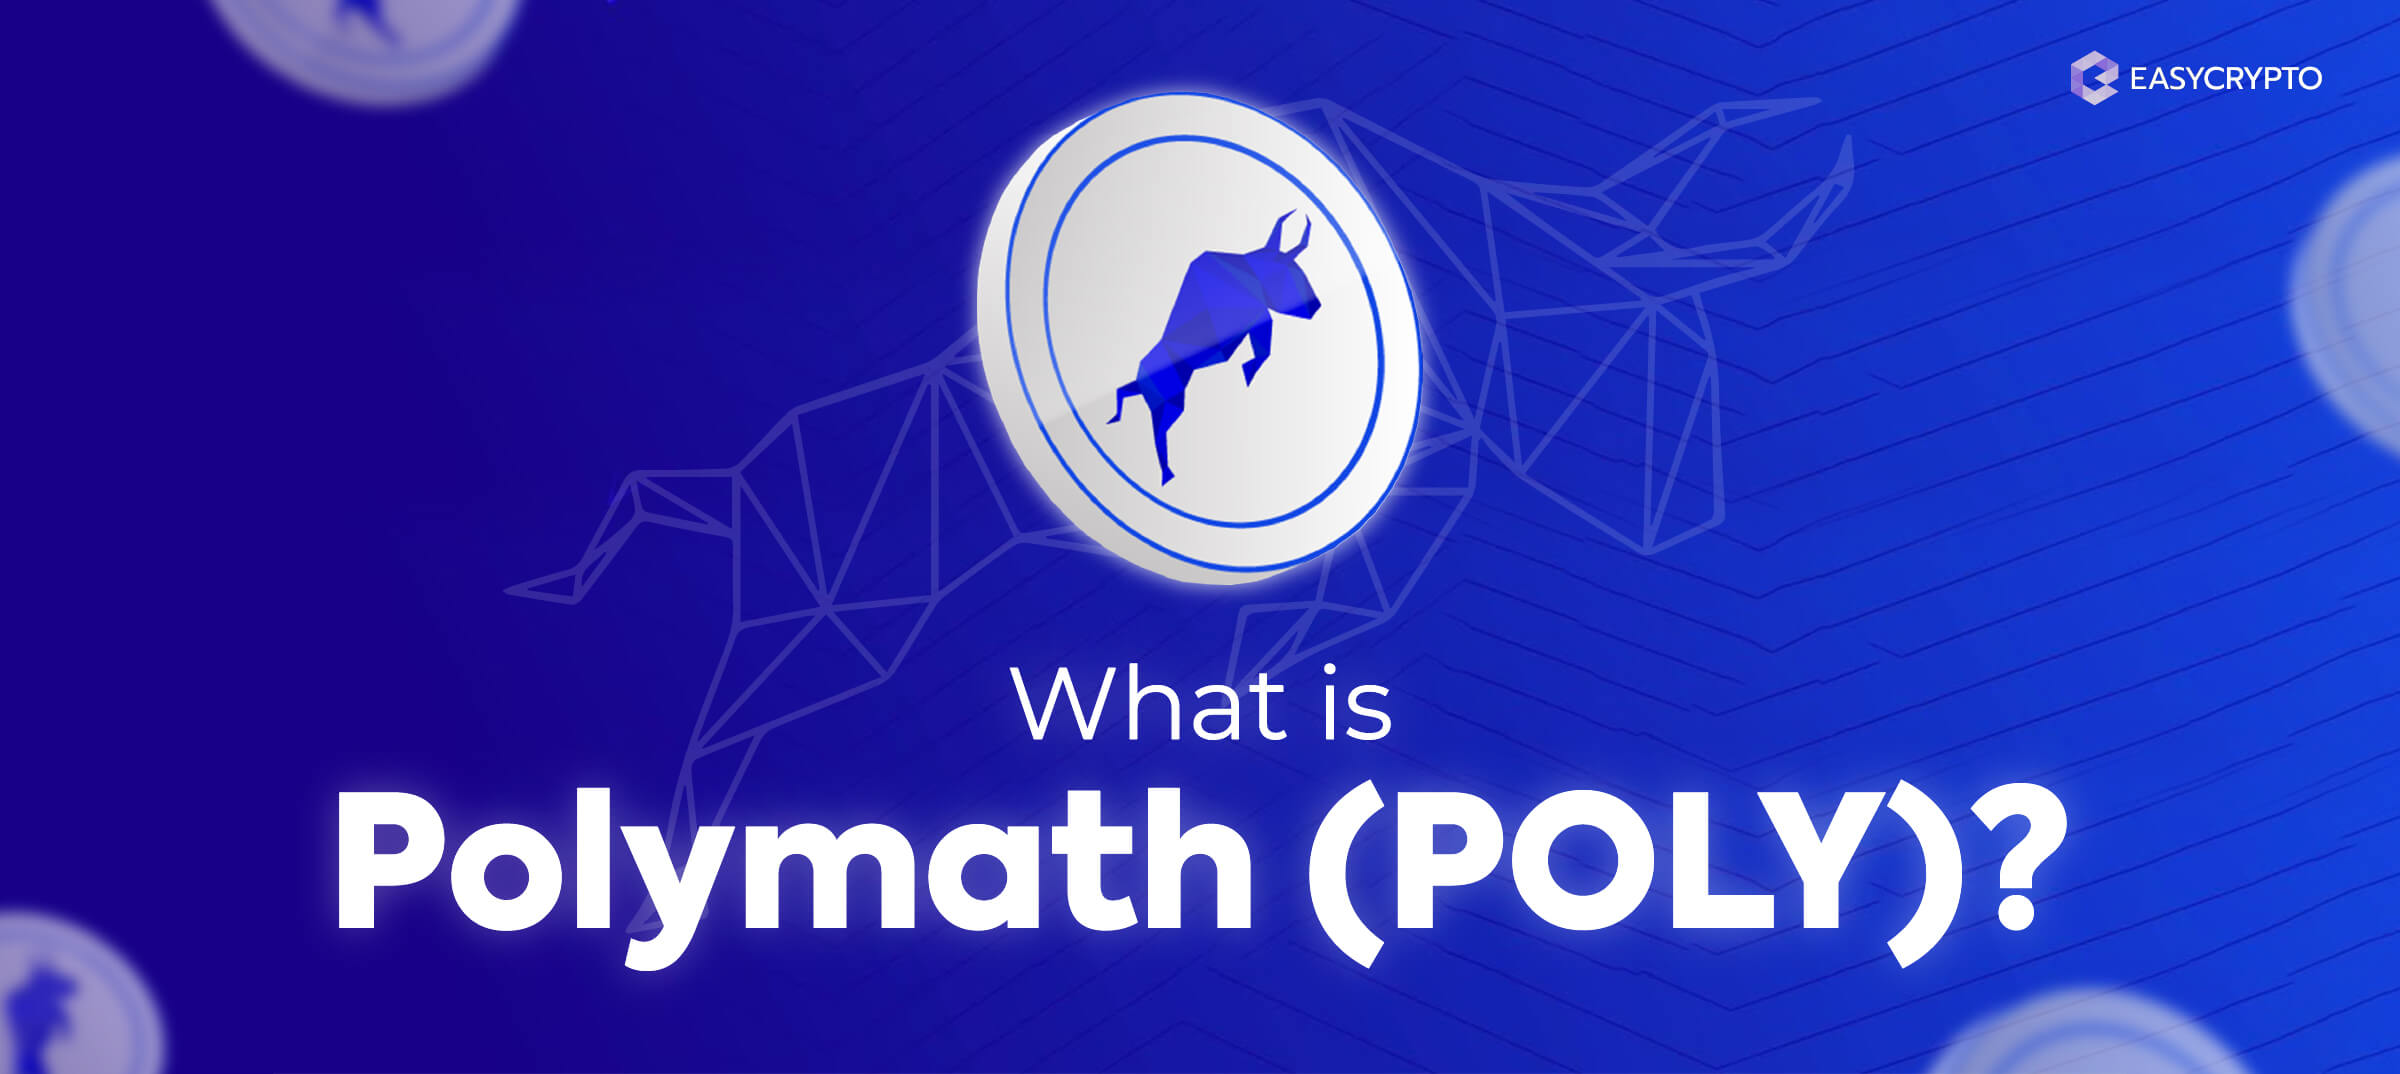 polymath crypto news